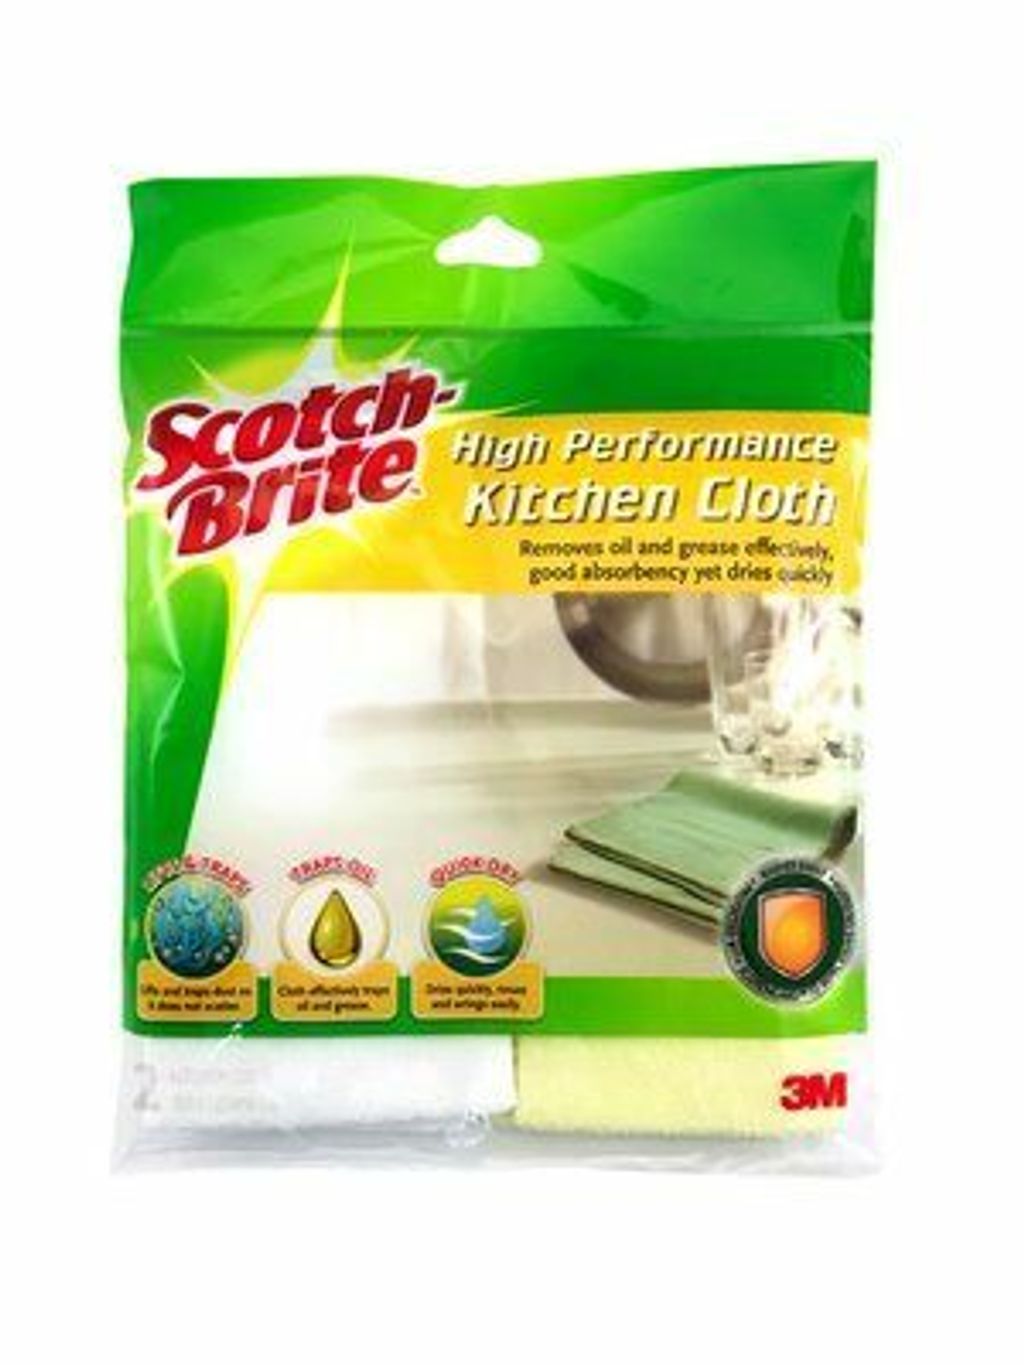 xt005592149-3m-scotch-brite-microfiber-kitchen-cloth-2-pieces-pack.jpg